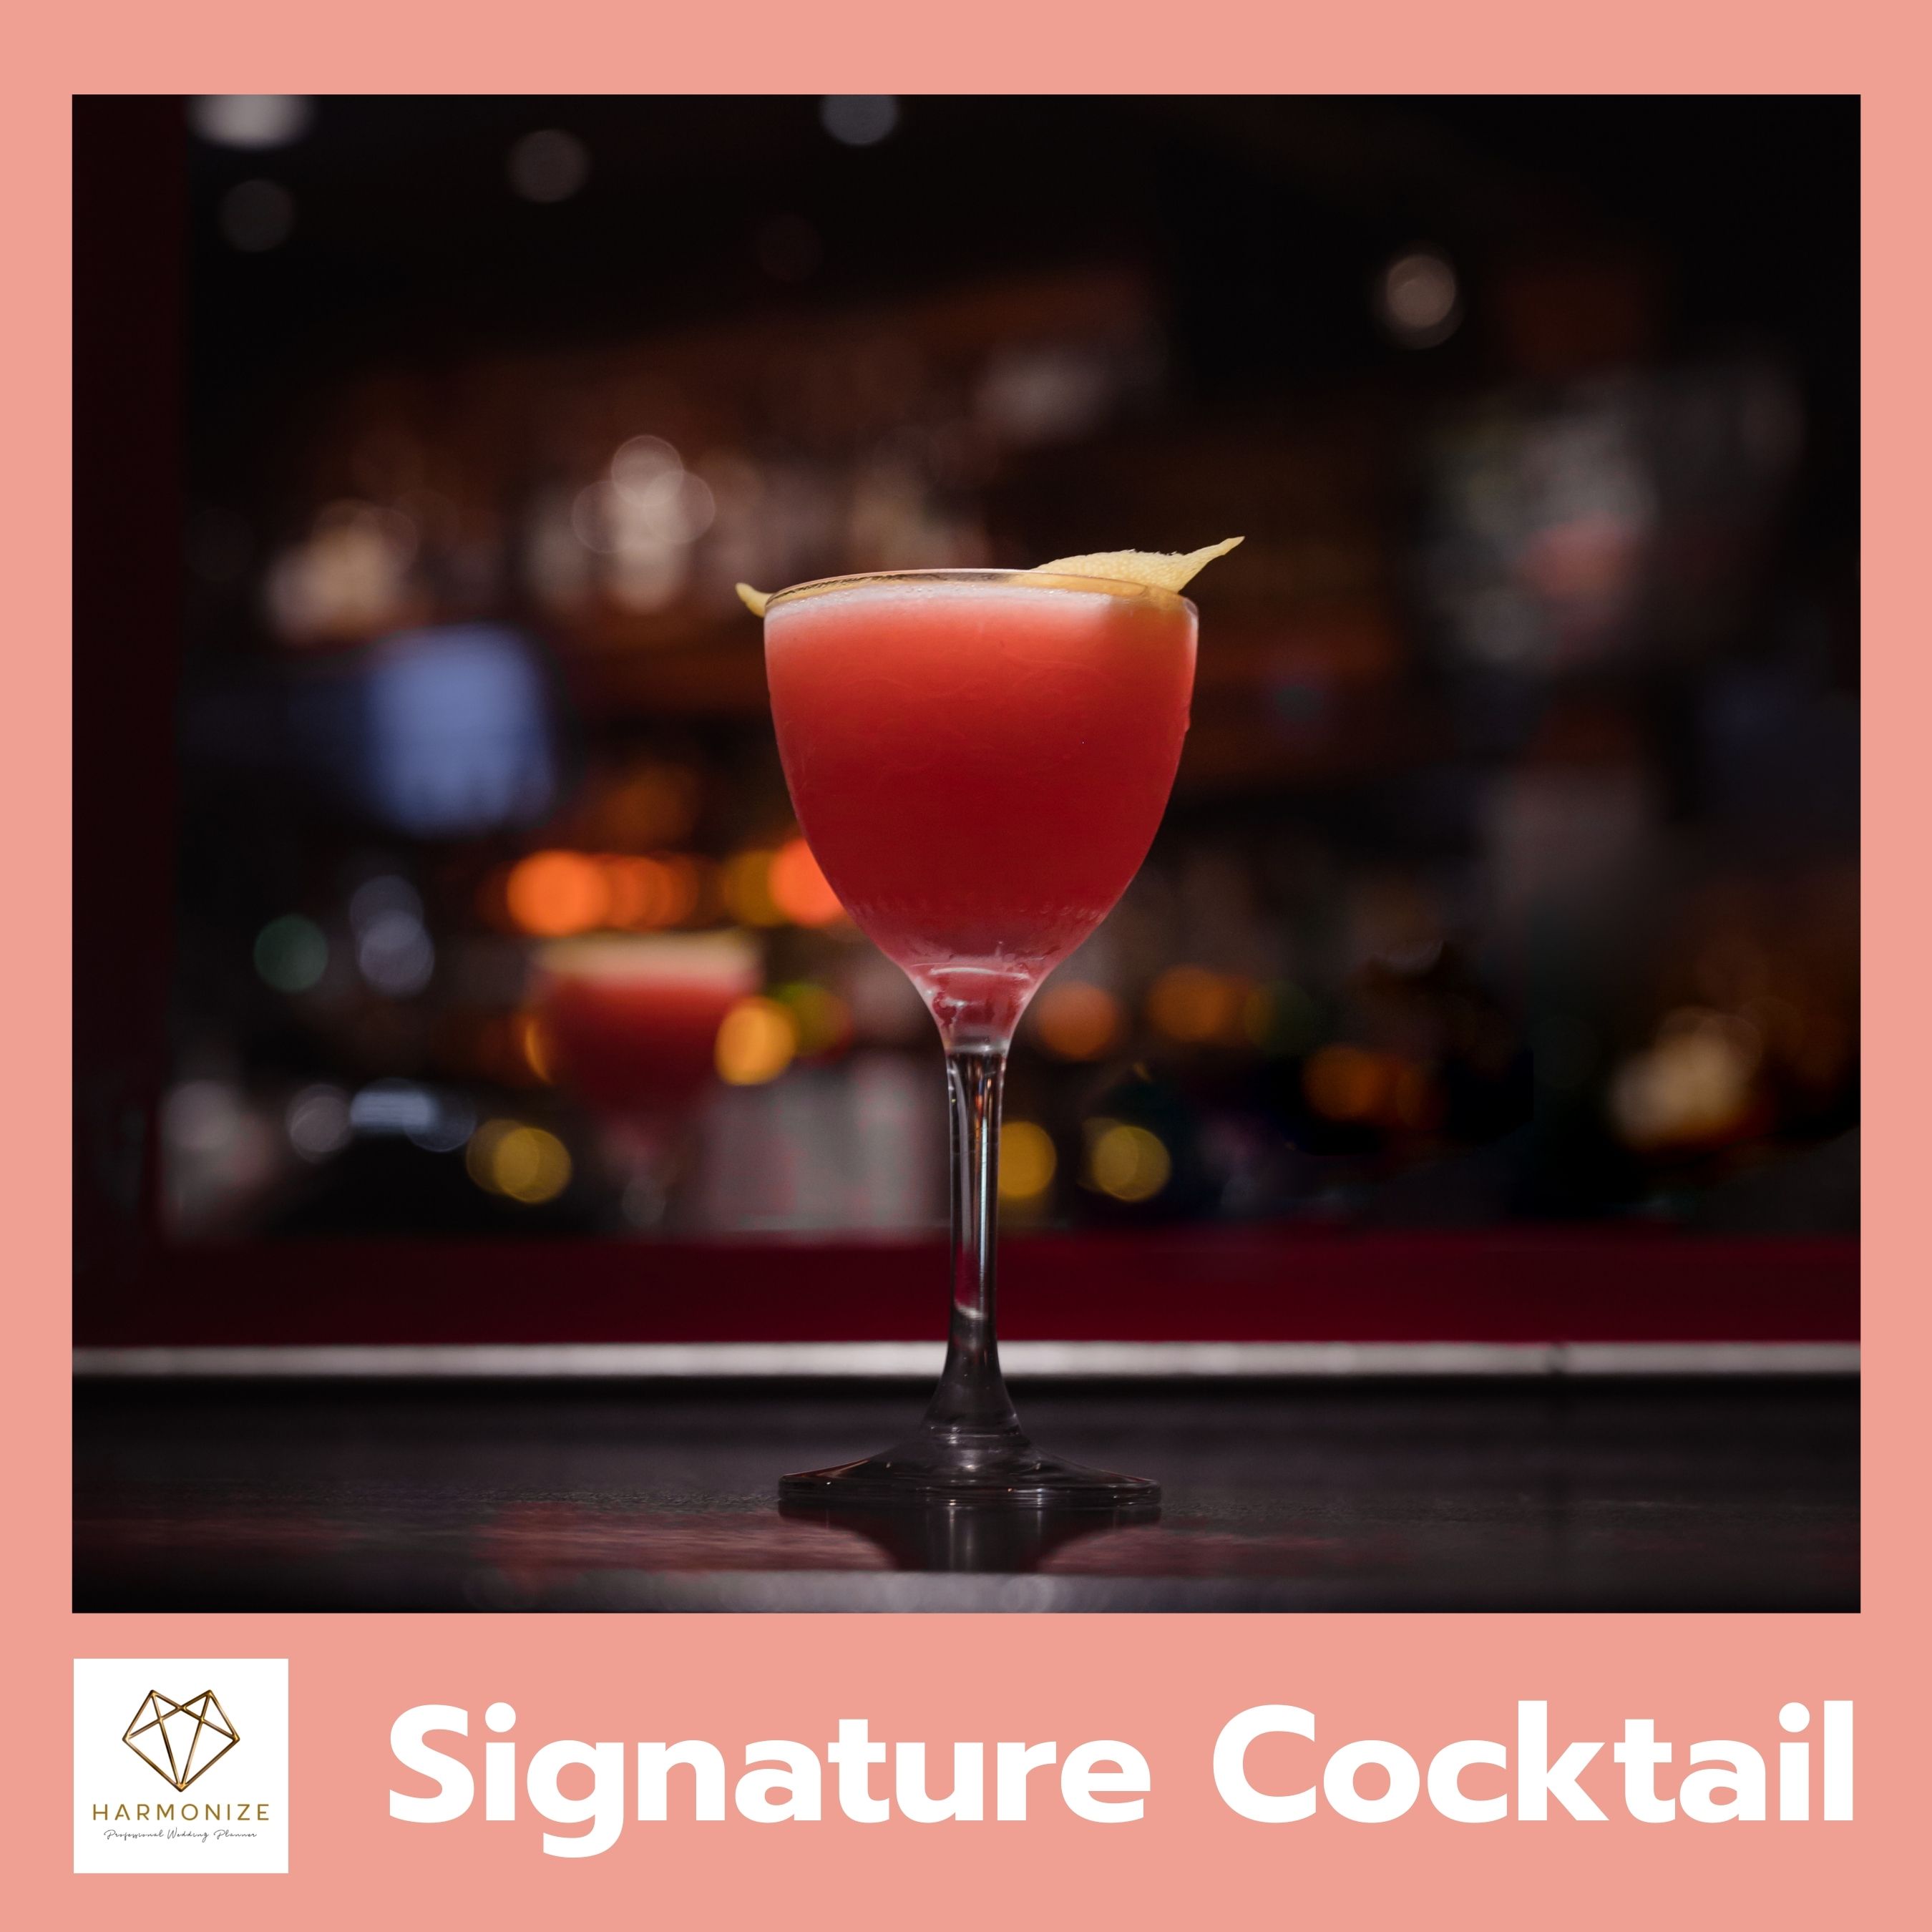 Signature Cocktail - ไอเดียสุดเก๋ สำหรับ "อาหาร" Wedding & Party